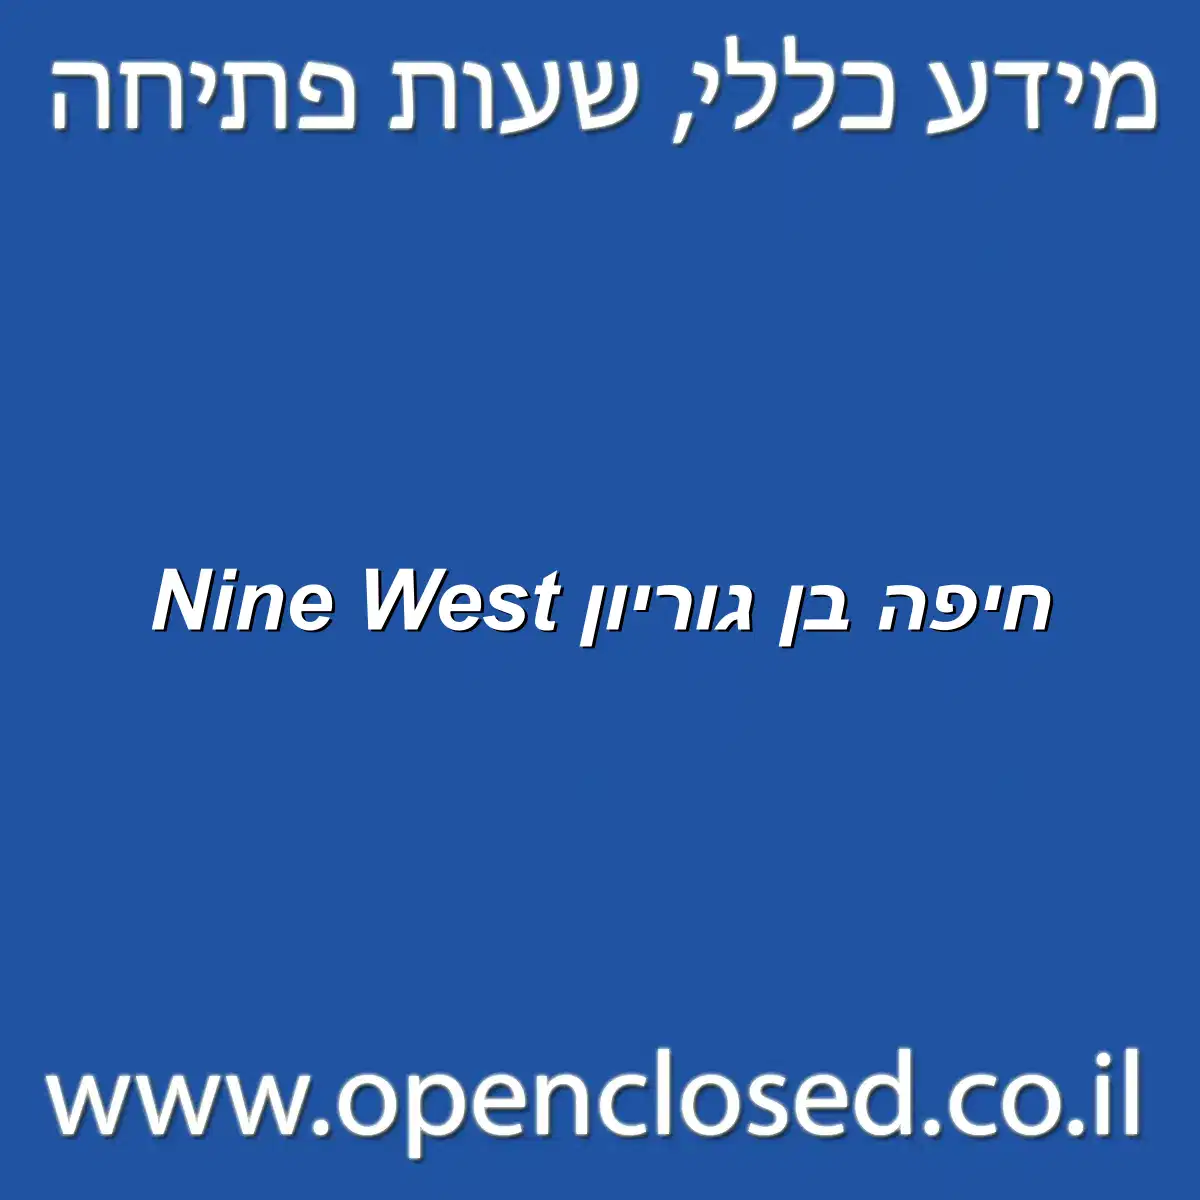 Nine West חיפה בן גוריון